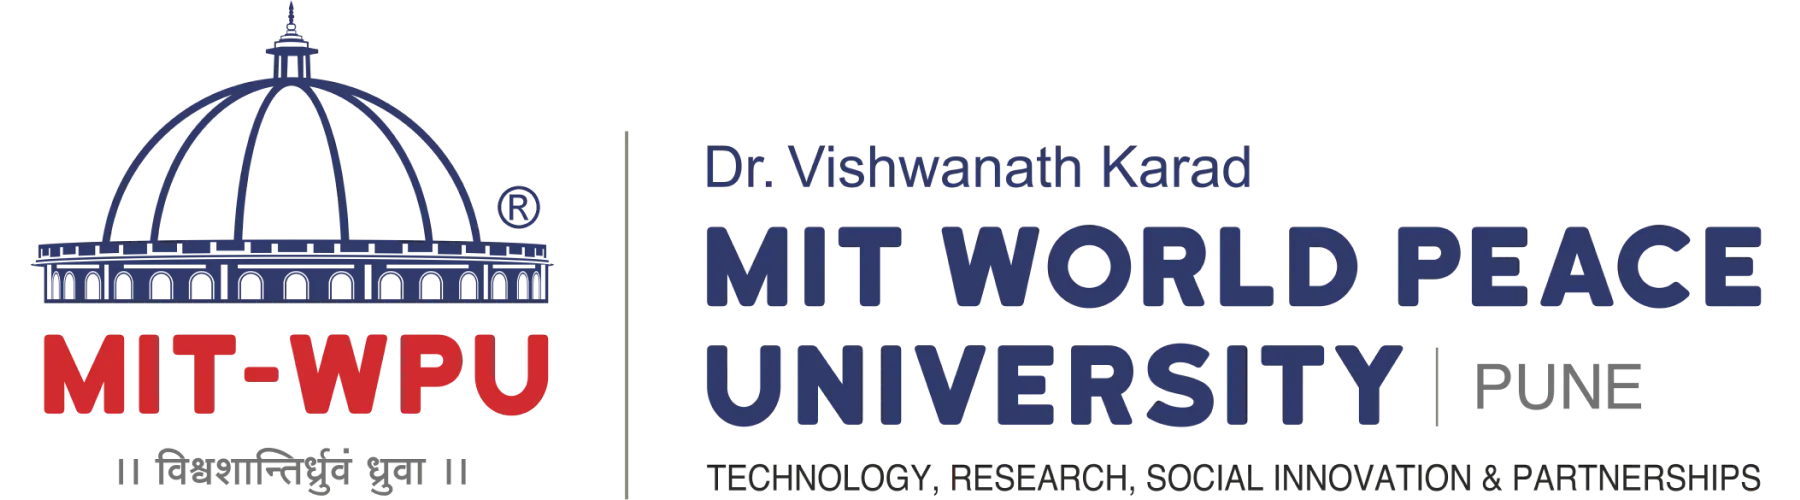 mit-world-peace-university Logo